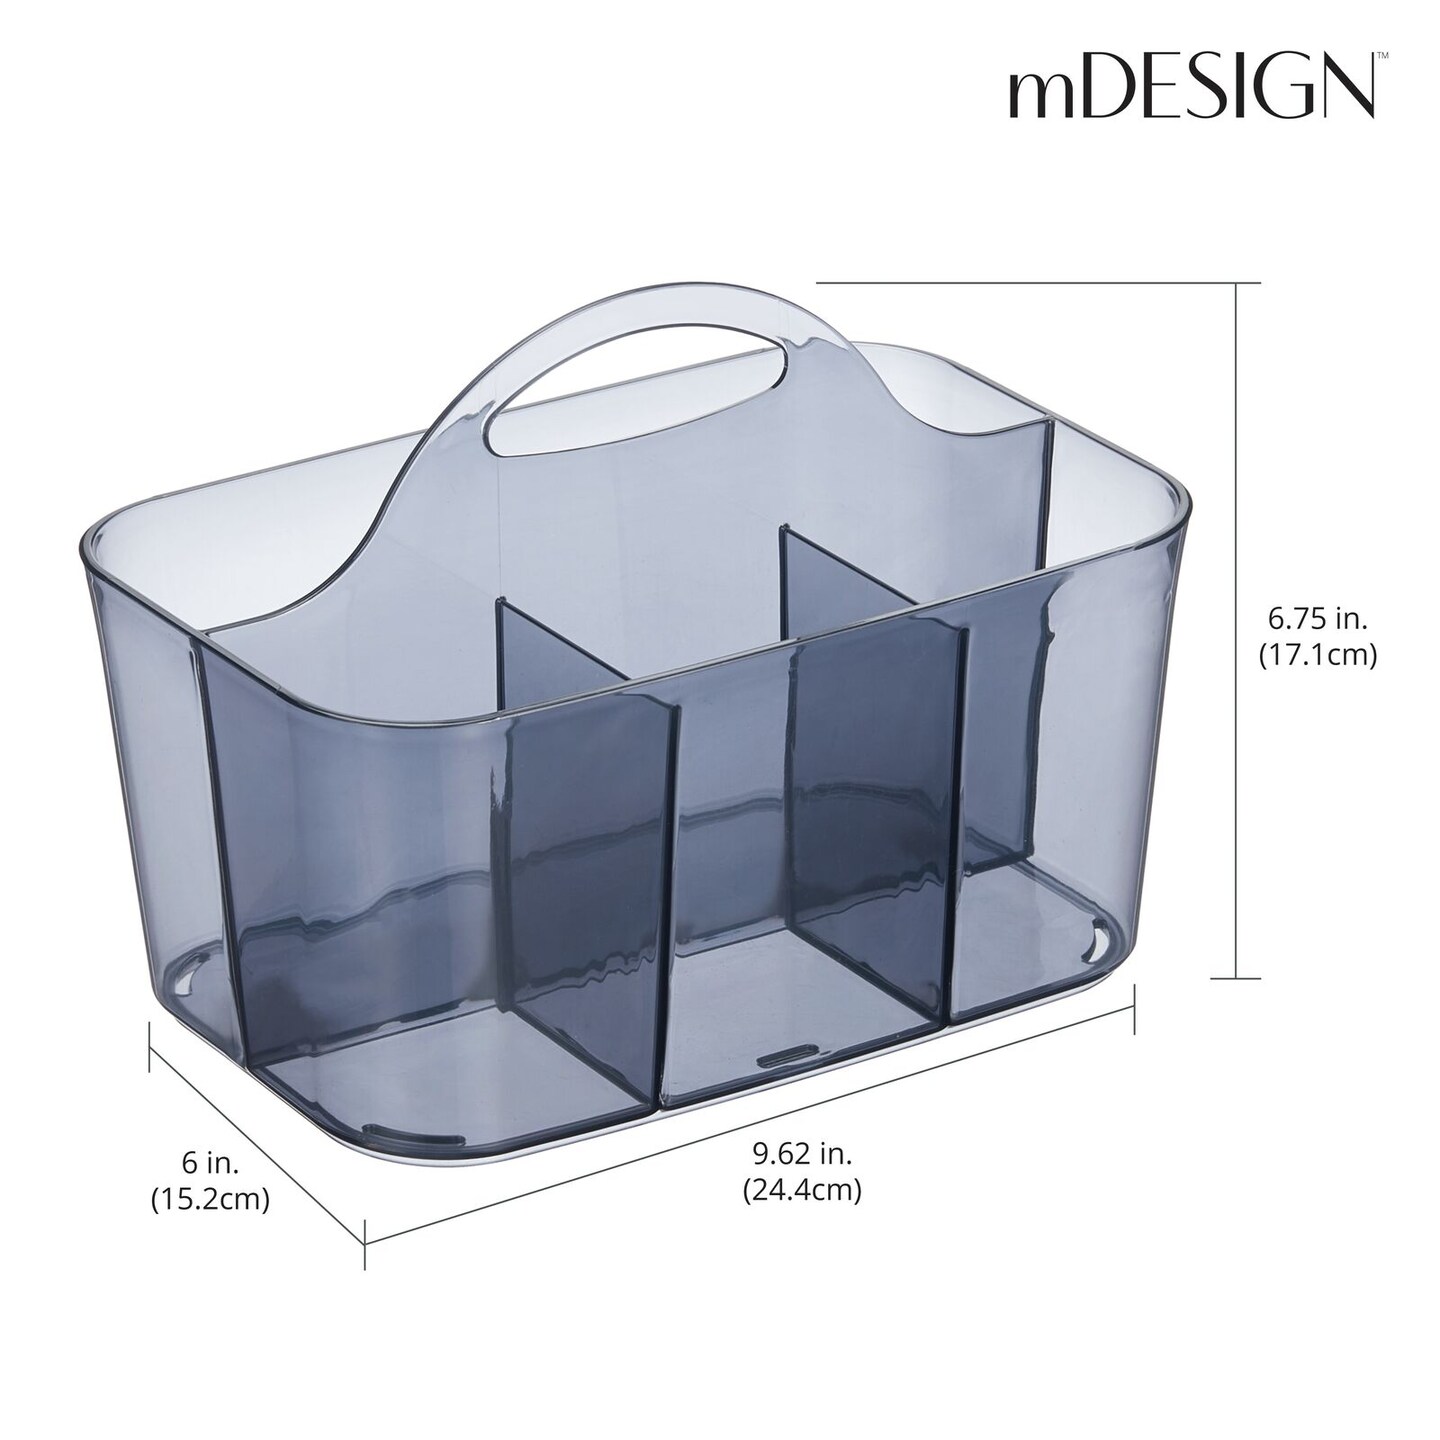 mDesign Plastic/Metal Bathroom Storage Organizer Caddy Tote